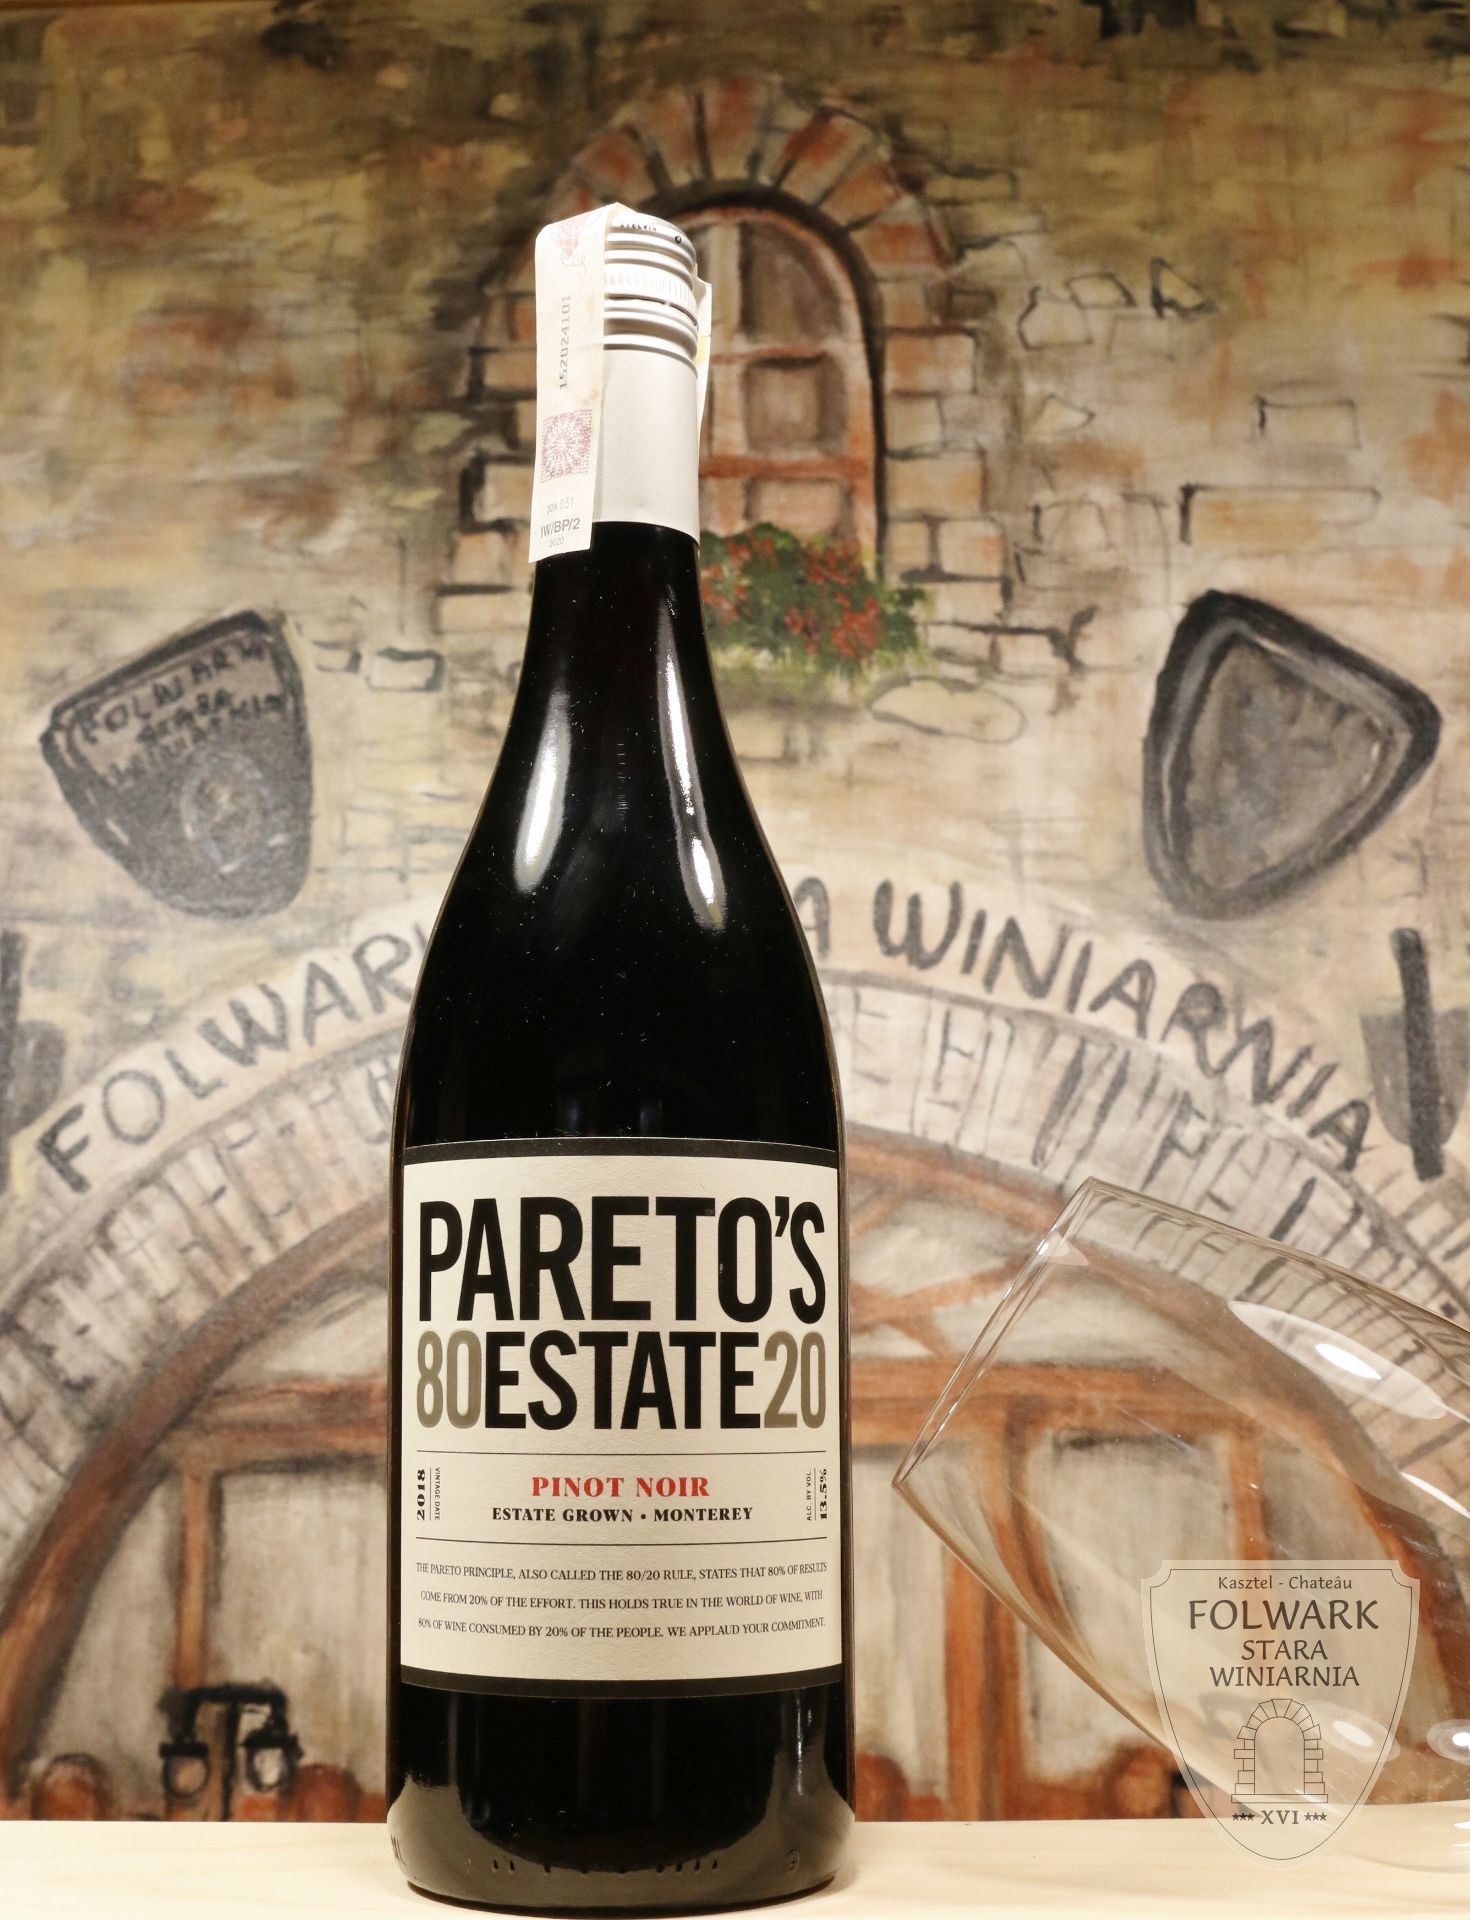 Pareto\'s Pinot Noir - Folwark Kalifornii Winiarnia wina Stara poleca z